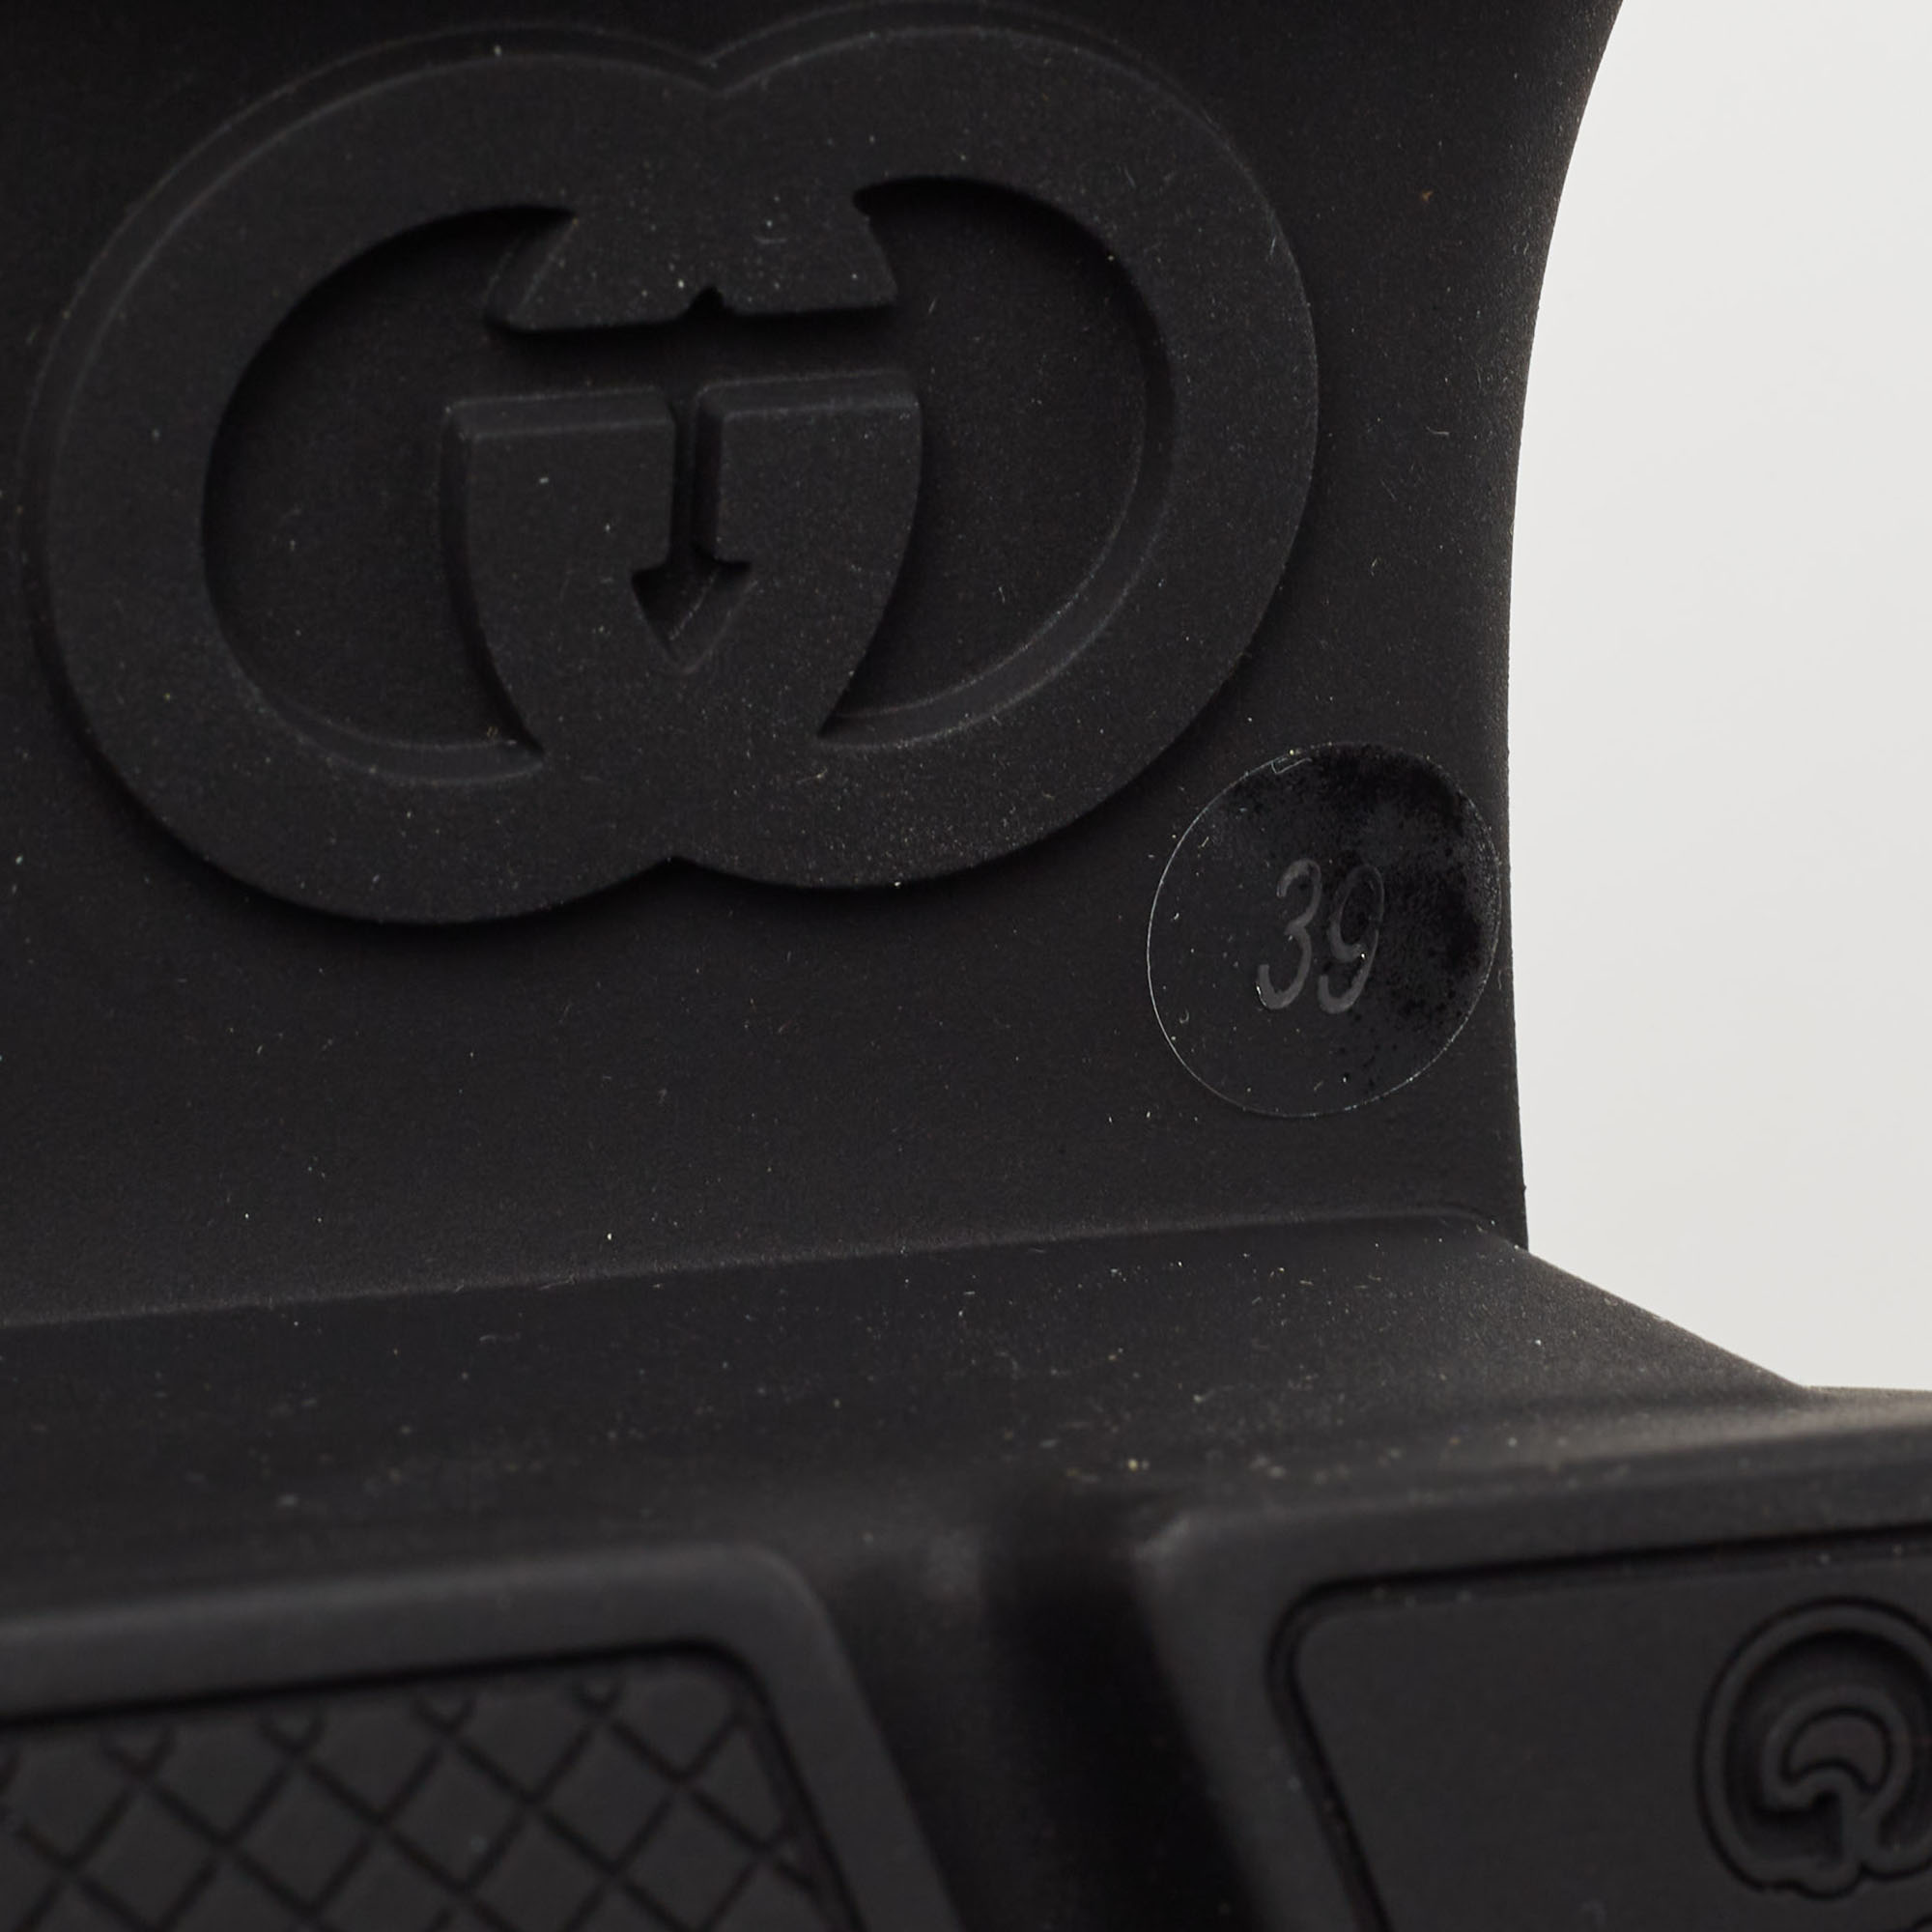 Gucci Cream Leather Interlocking GG Platform Loafers Size 39